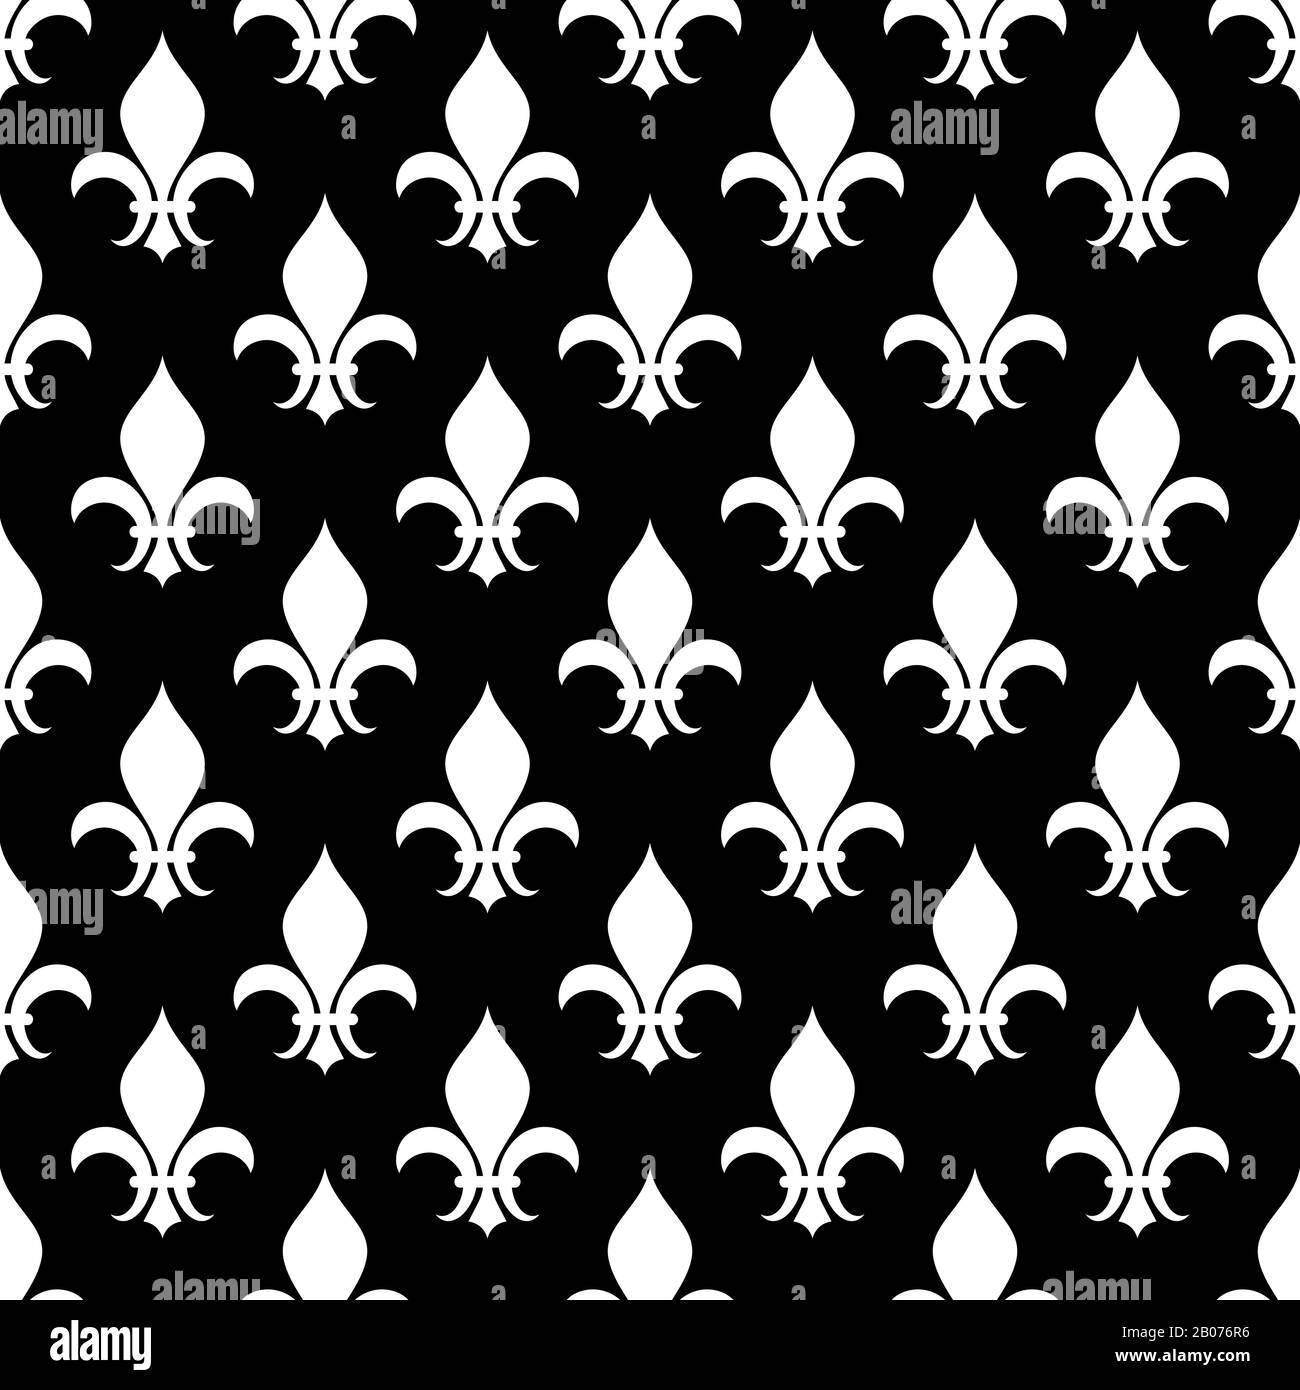 Vector fleur de lis seamless pattern in black and white. Wallpaper design decoration illustration Stock Vector